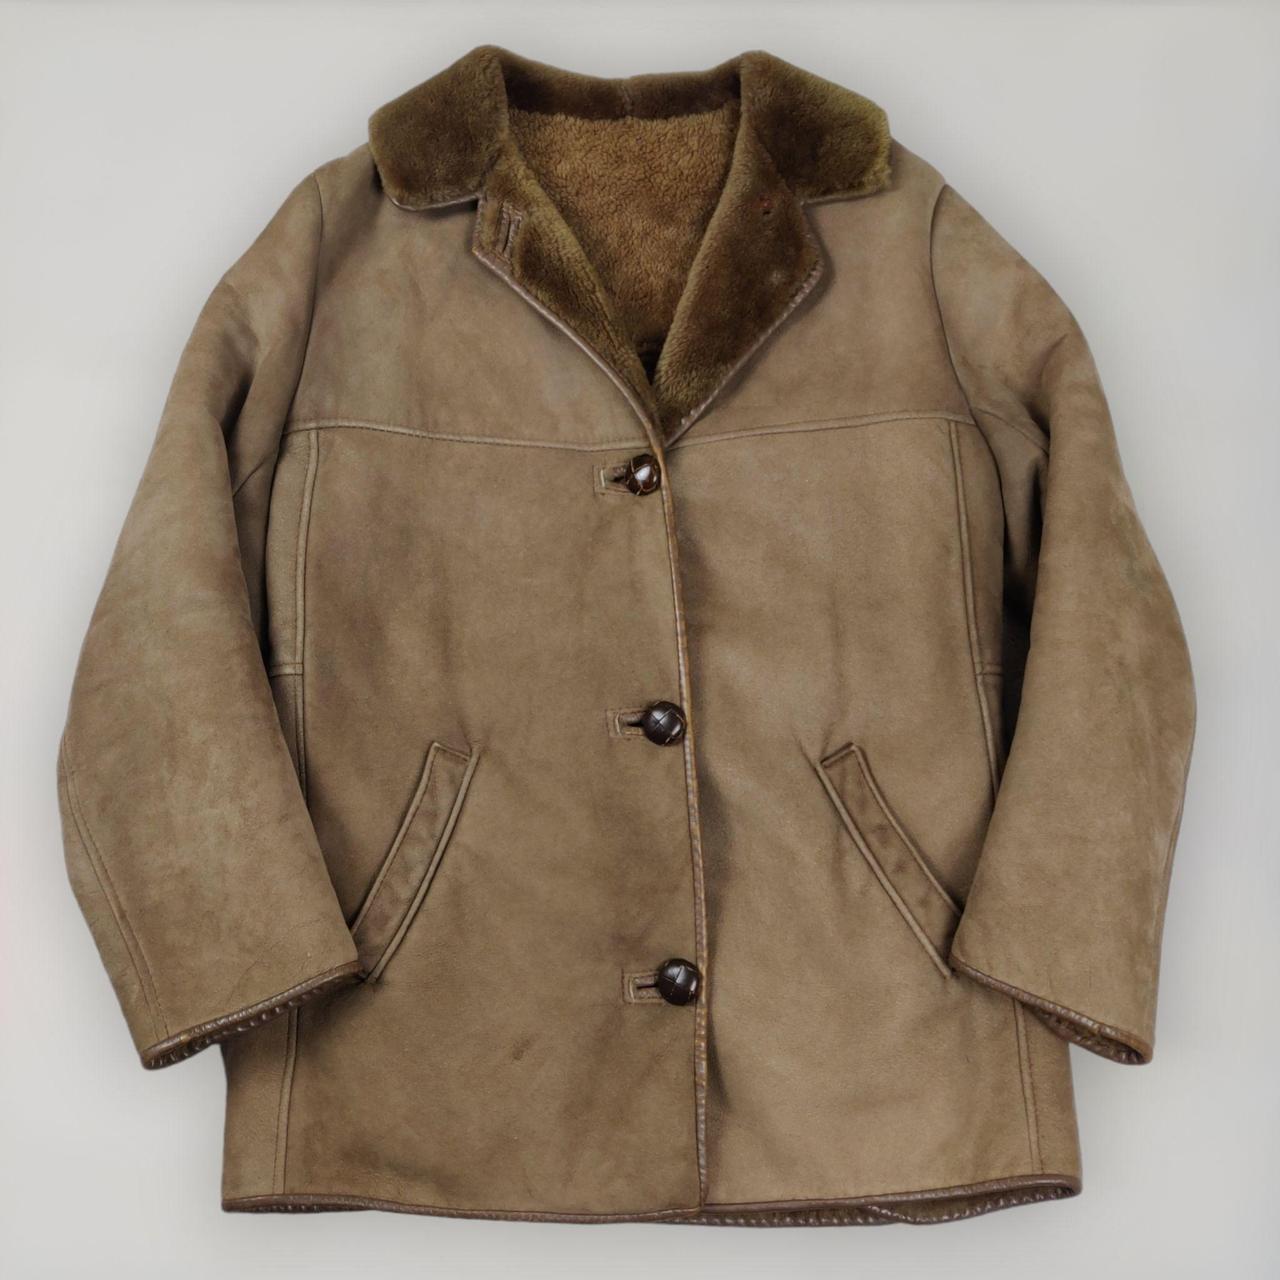 Vintage Nurseys Sheepskin Shearling Jacket Coat Made... - Depop